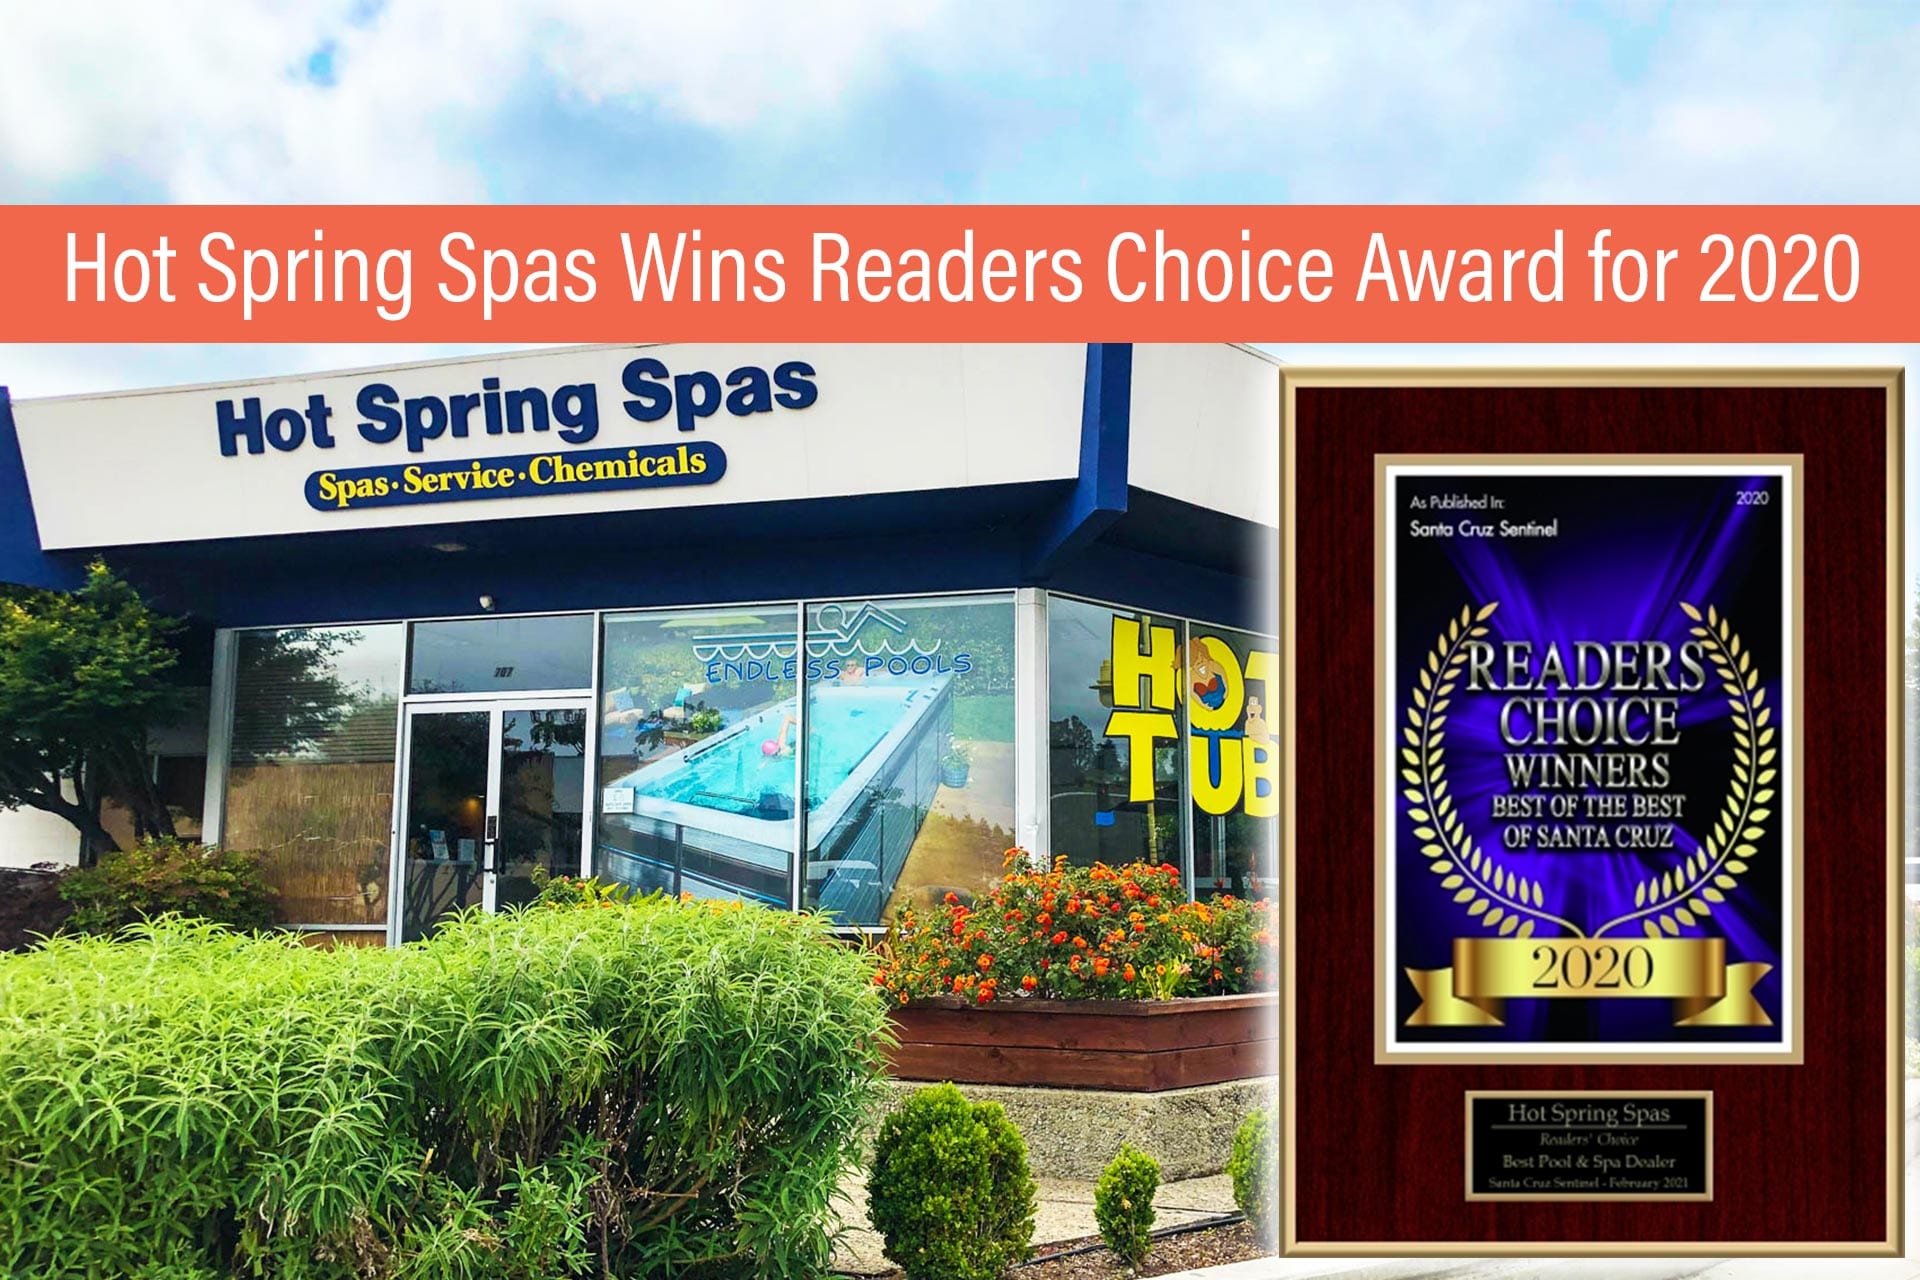 Hot Spring Spas Wins Readers Choice Award for 2020